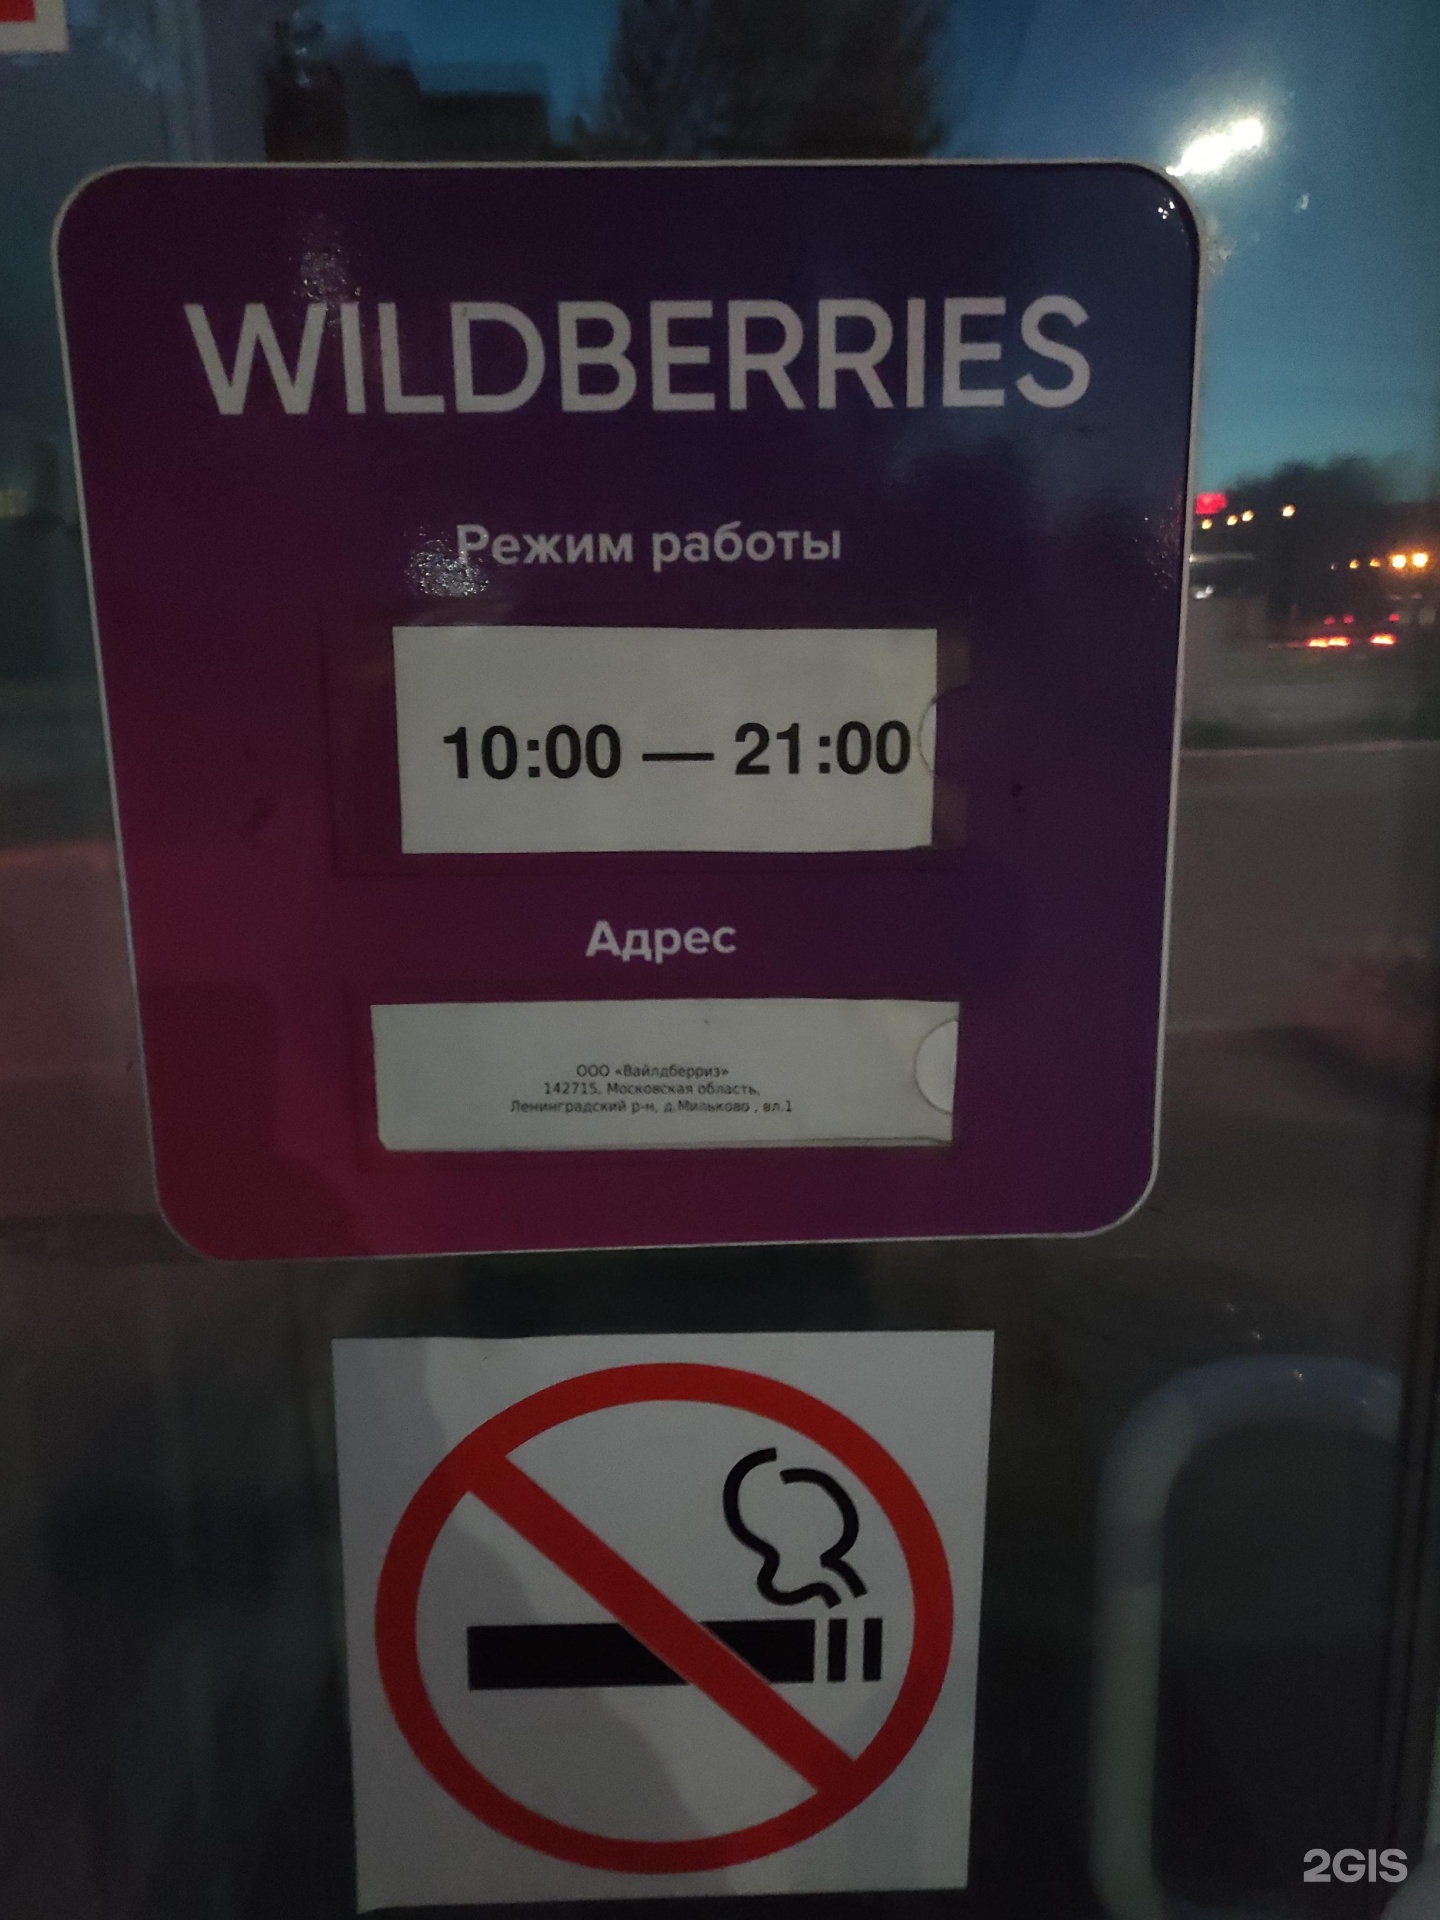 Wildberries Интернет Магазин Официальный Архангельск